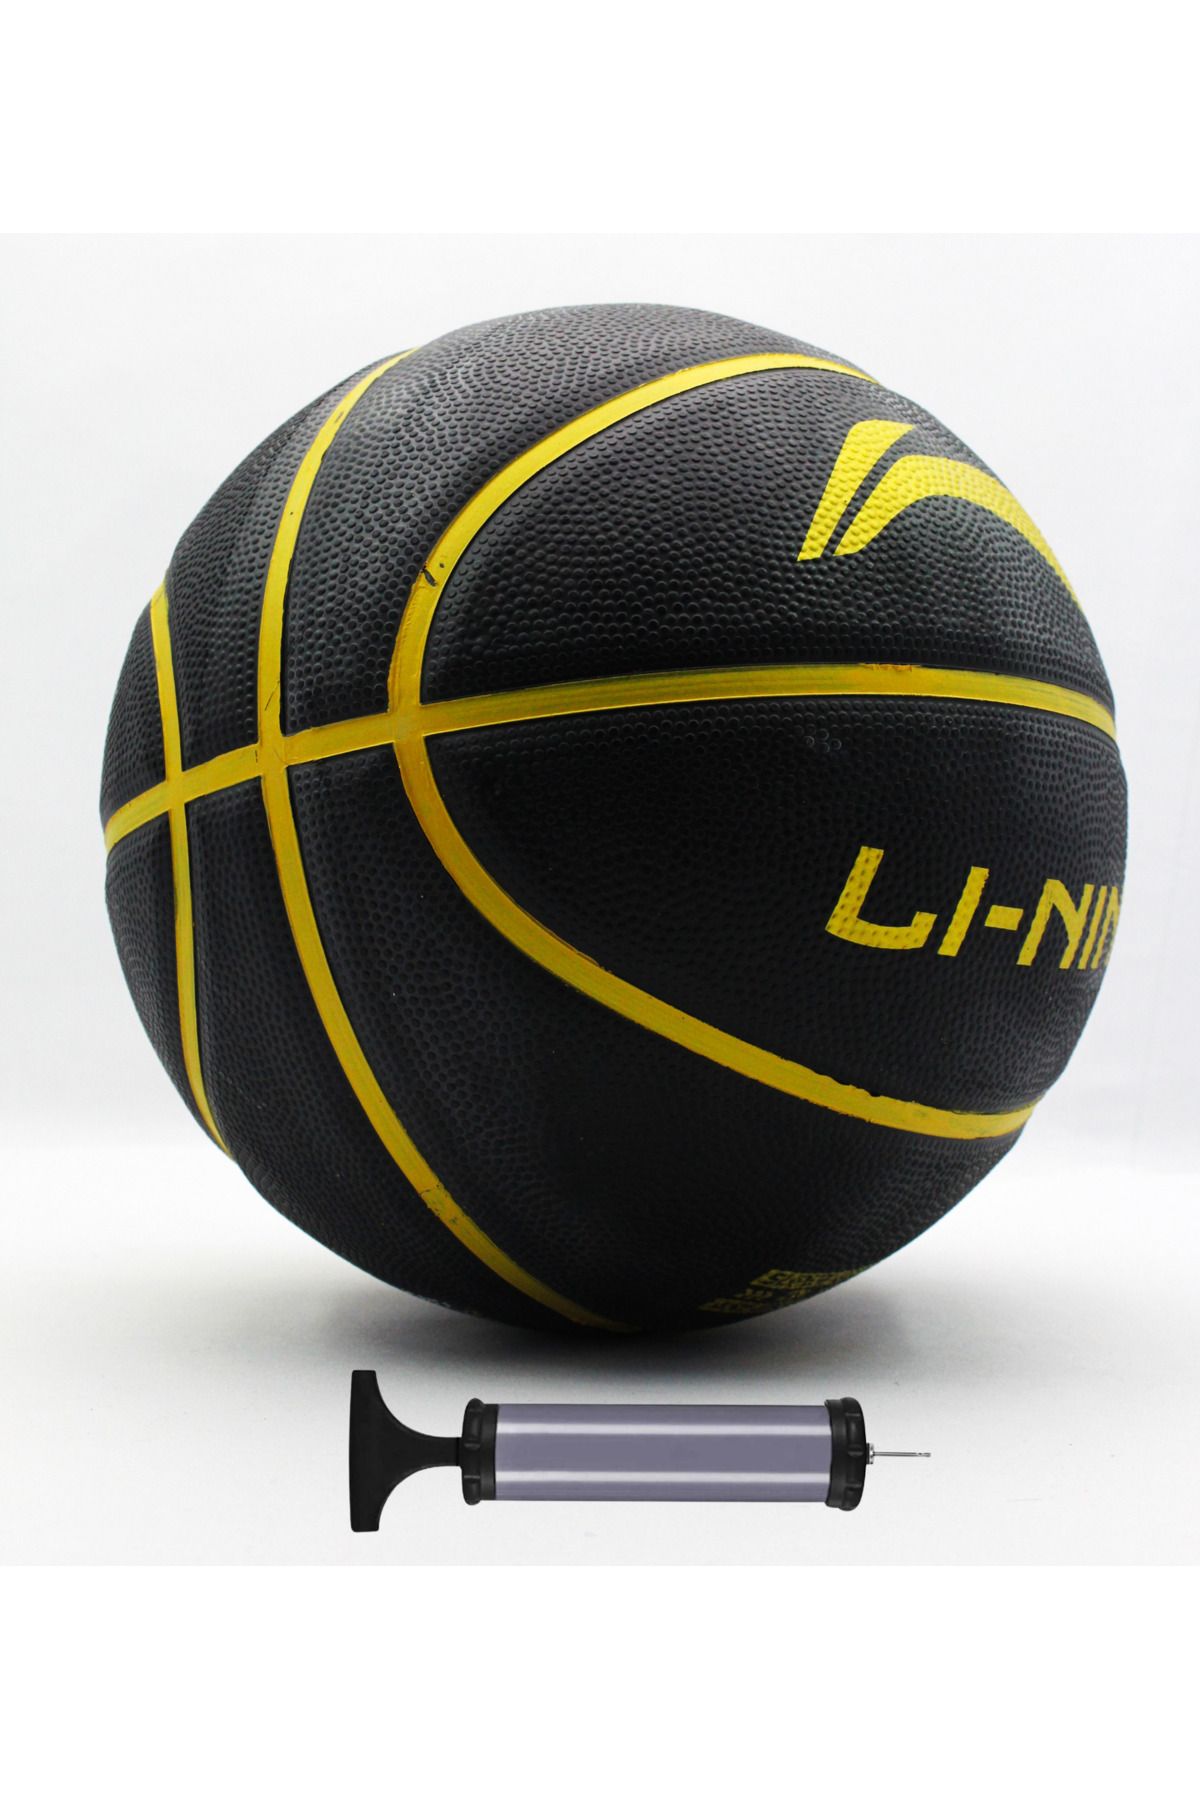 CAN SPORTS Basketbol Topu Linik Model Profesyonel Kalite Pompa Hediyeli